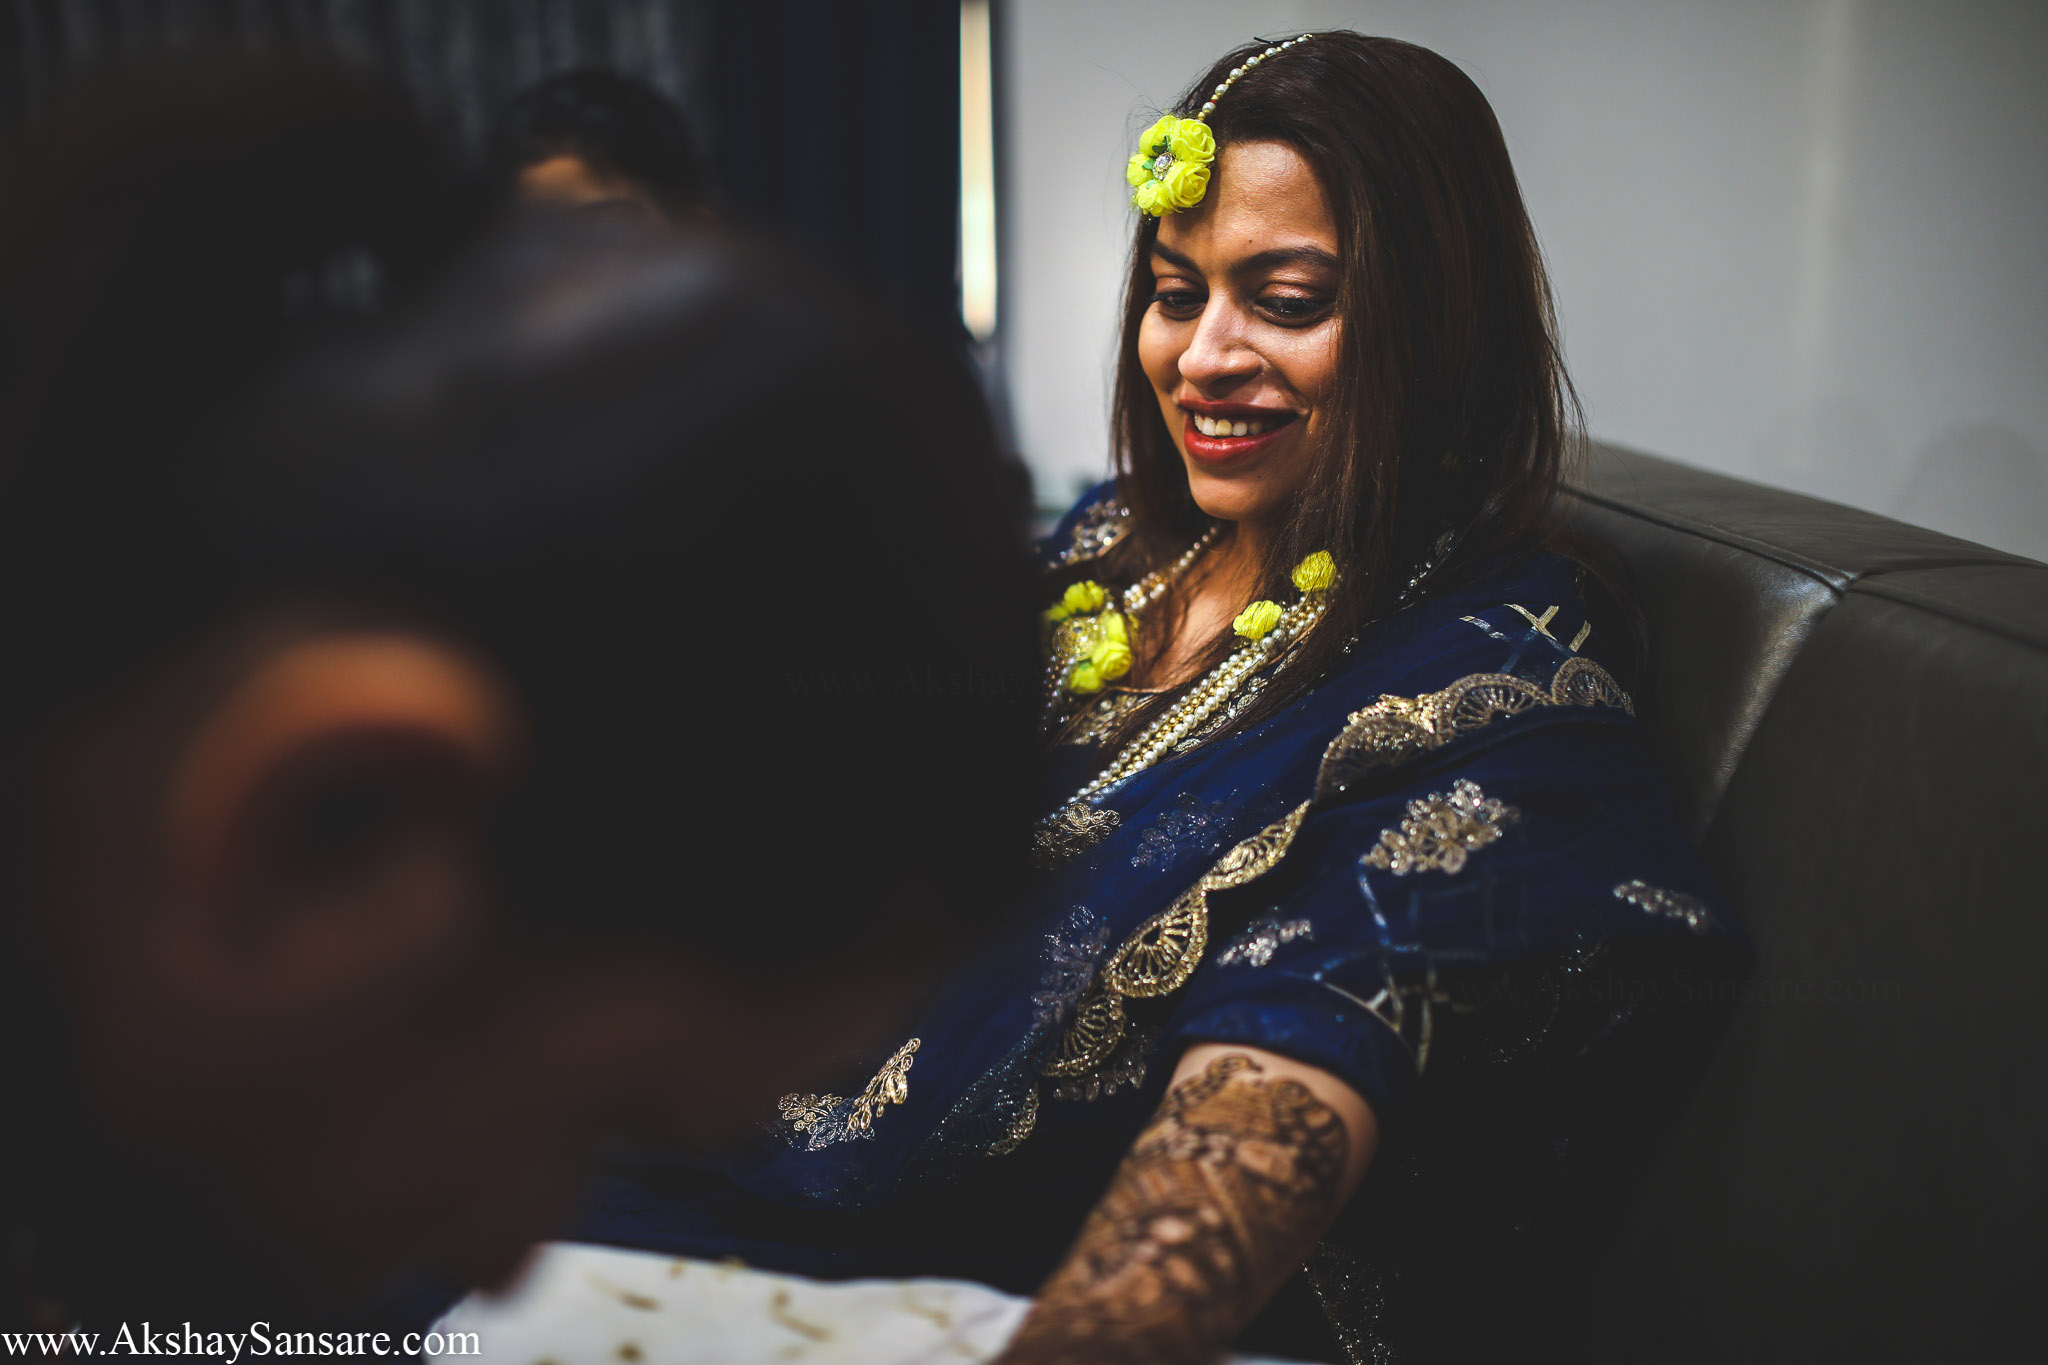 Ajay & Devika Akshay Sansare Photography Best Candid wedding photographer in mumbai india6.jpg